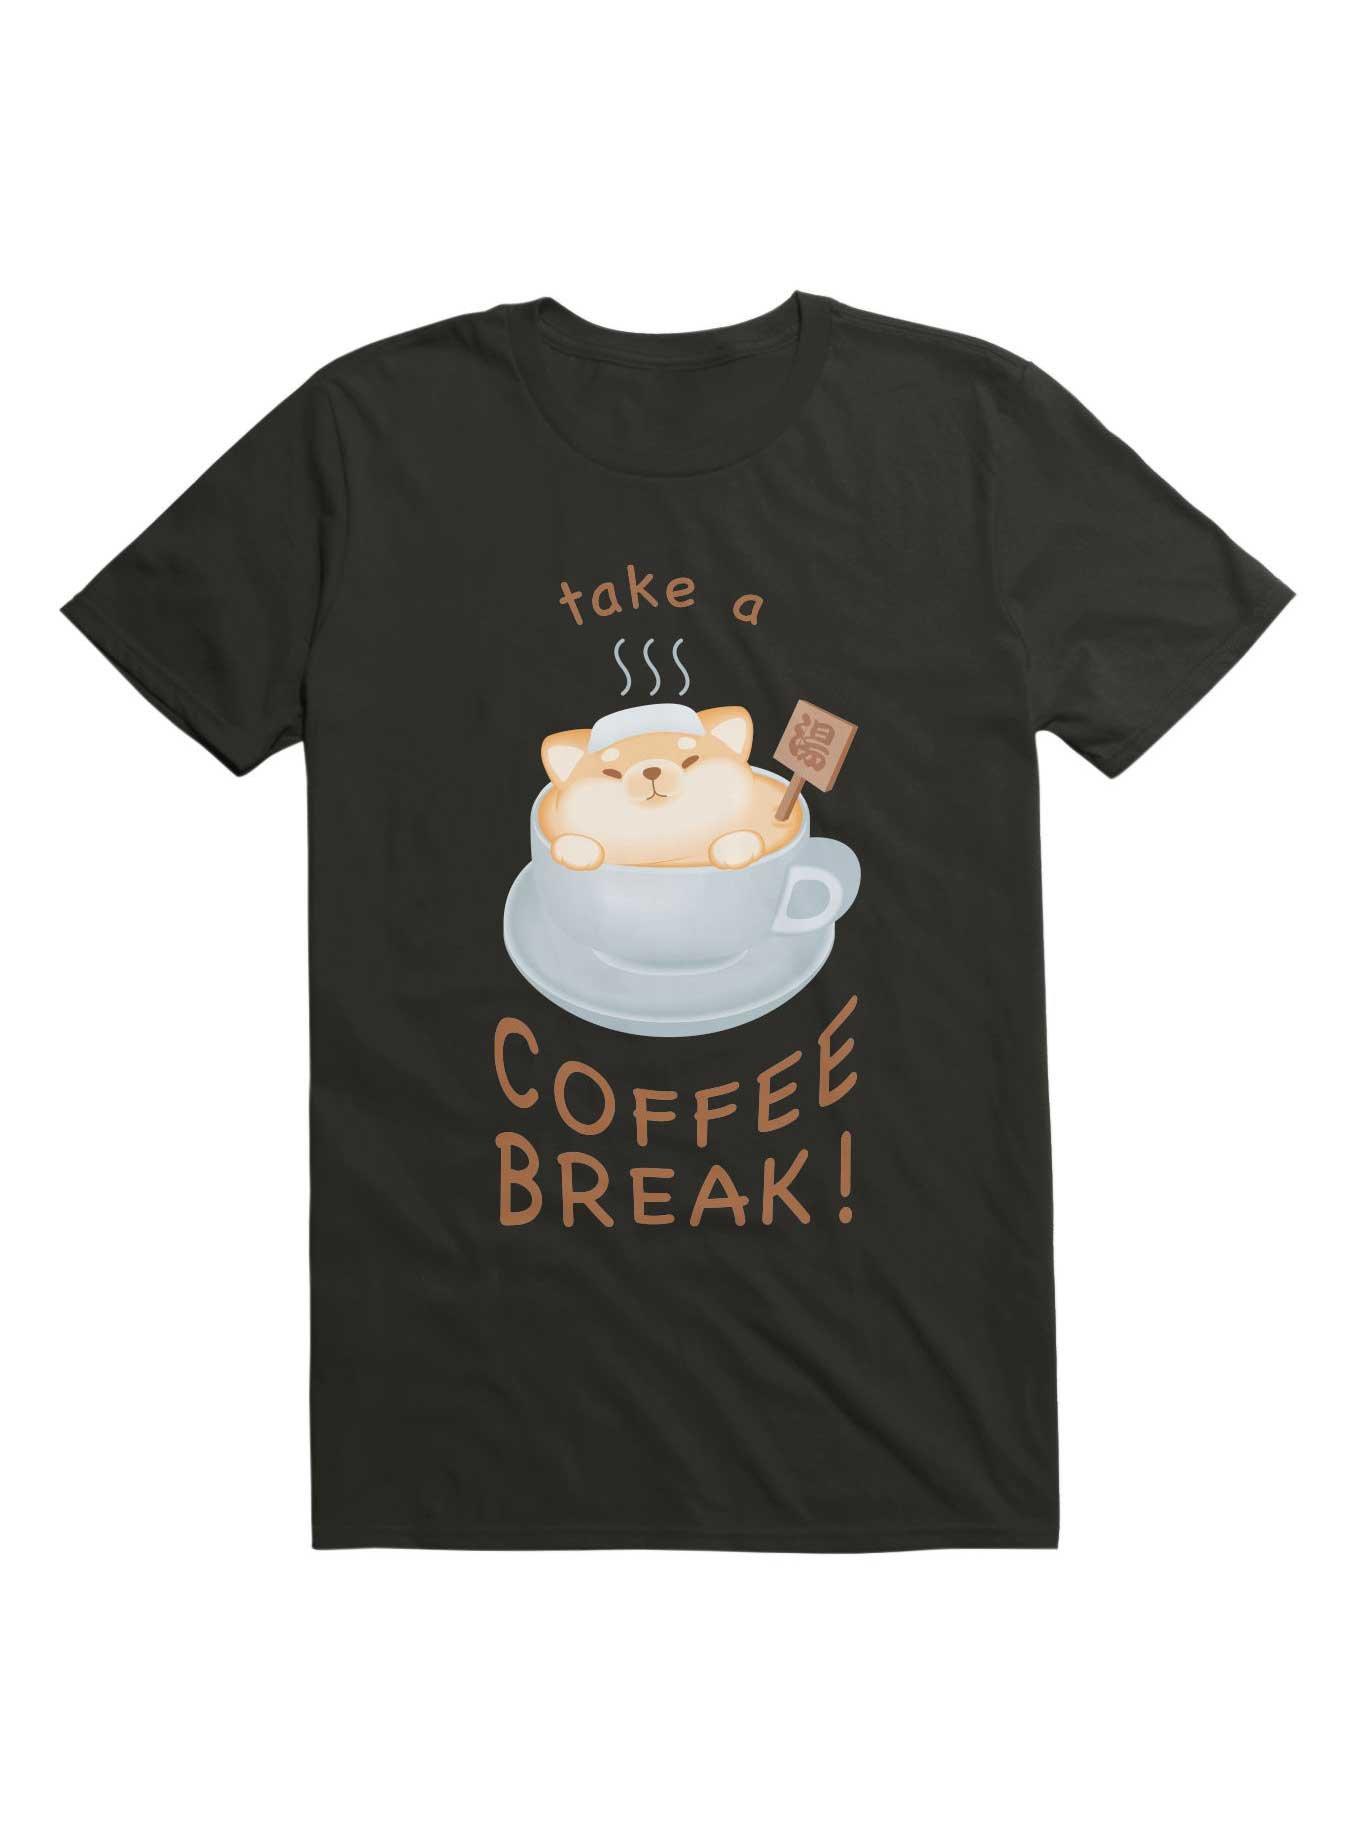 Kawaii coffee Hot Springs Take a Break! T-Shirt